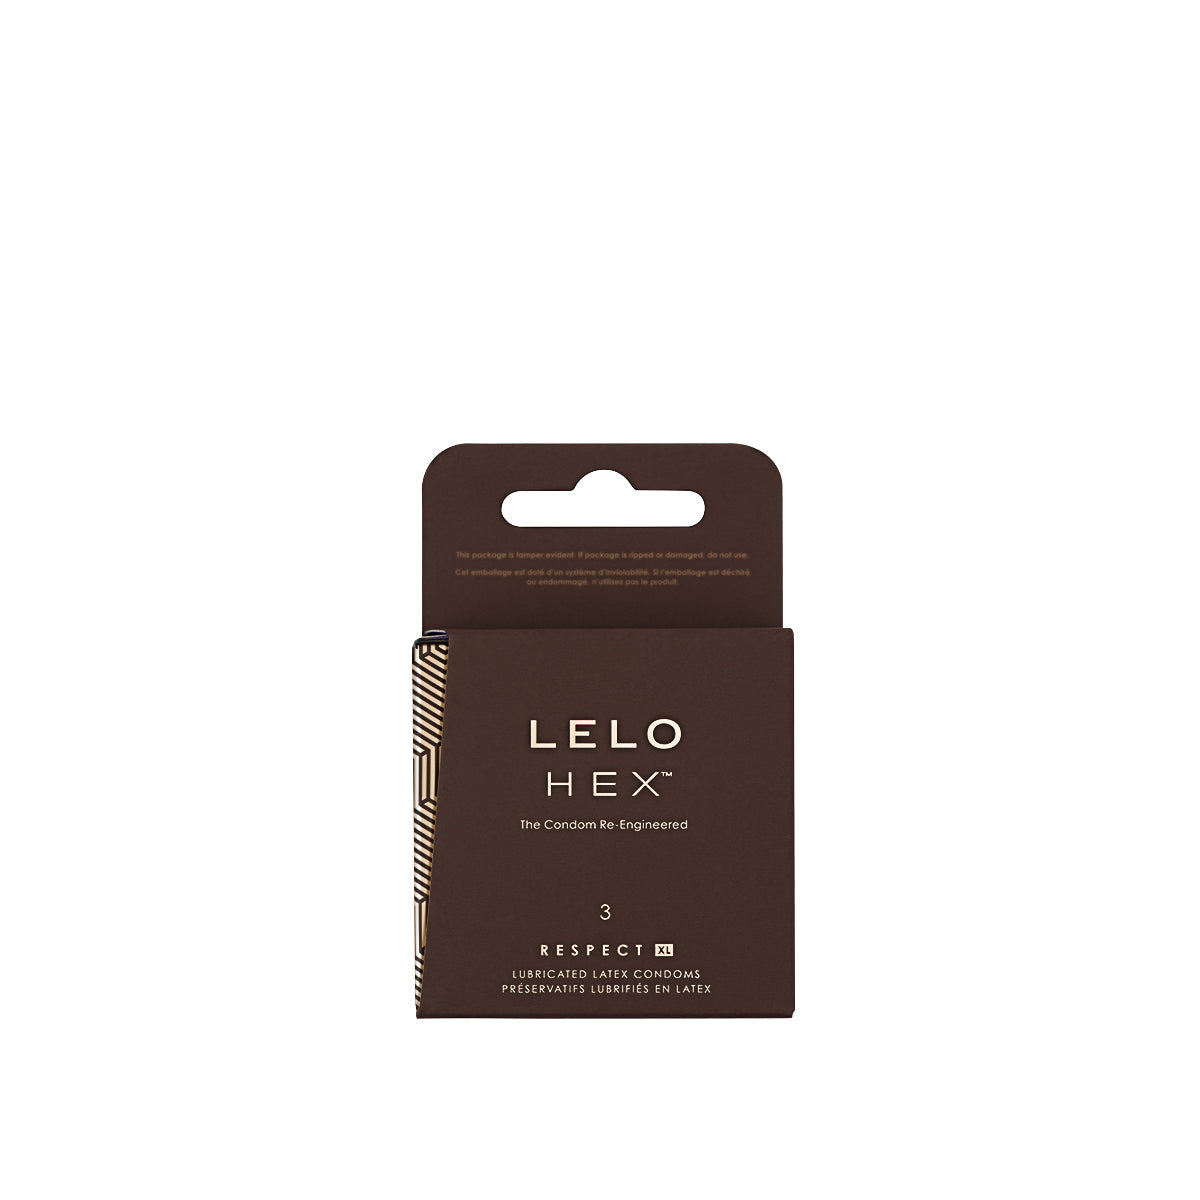 LeLo Hex 3 pack of condoms shown